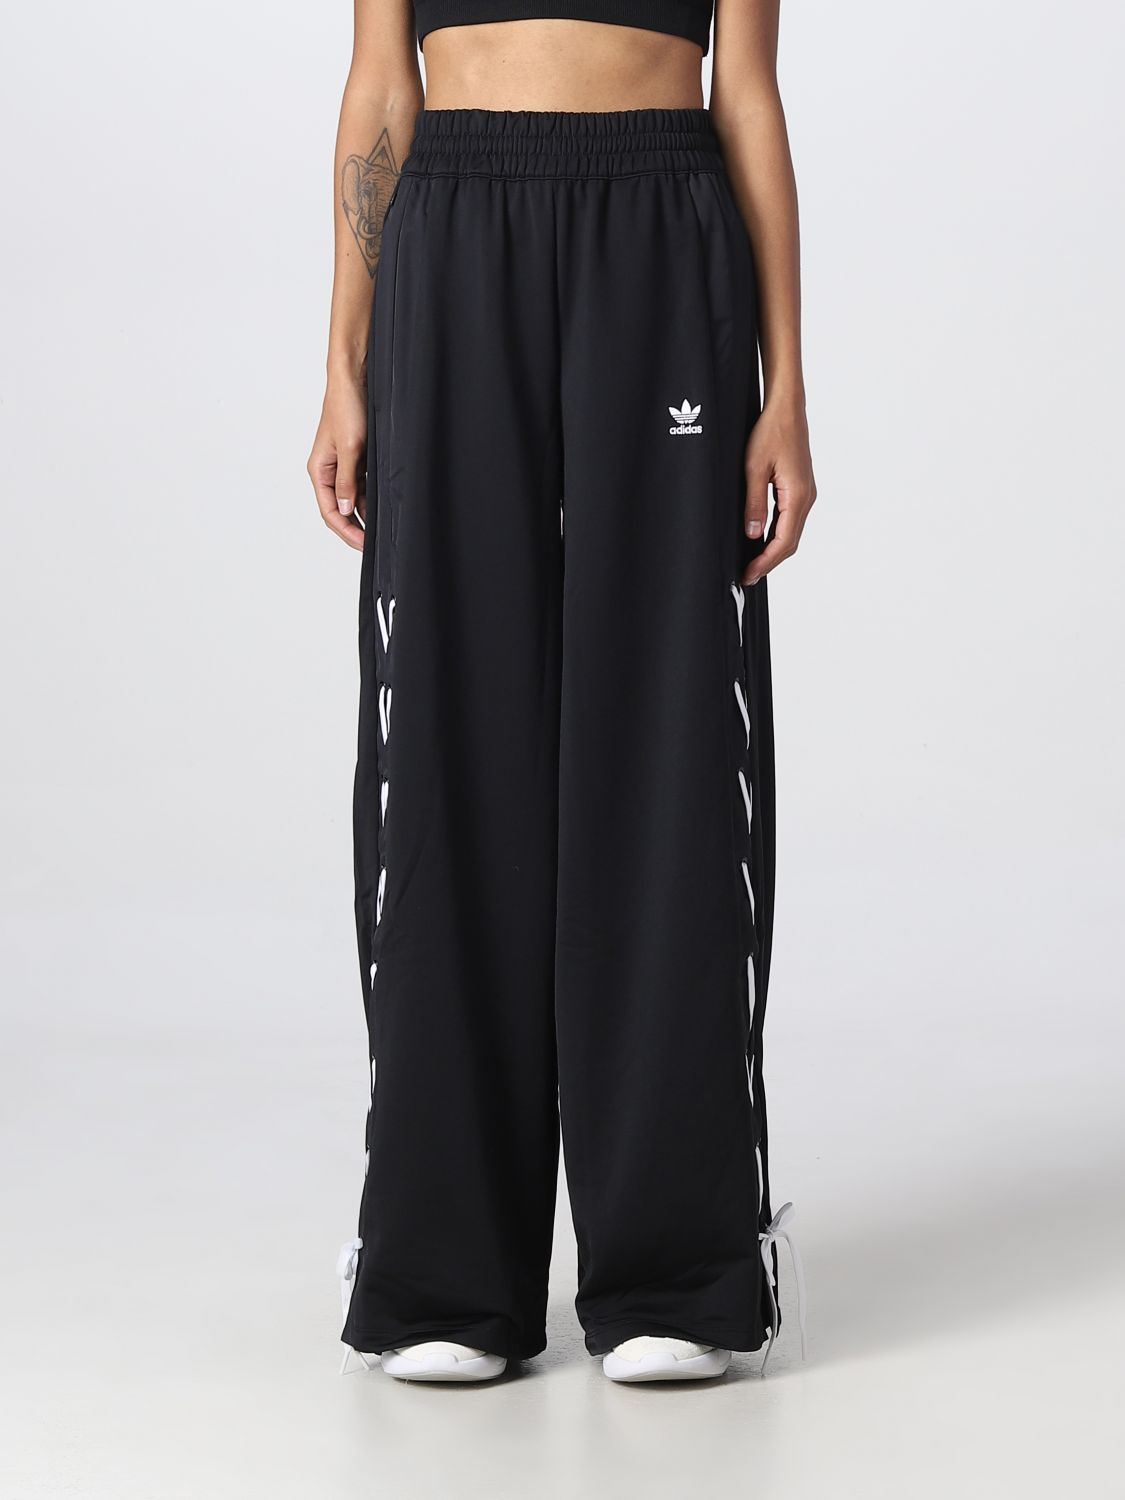 ADIDAS ORIGINALS: pants for woman - Black | Adidas Originals pants ...